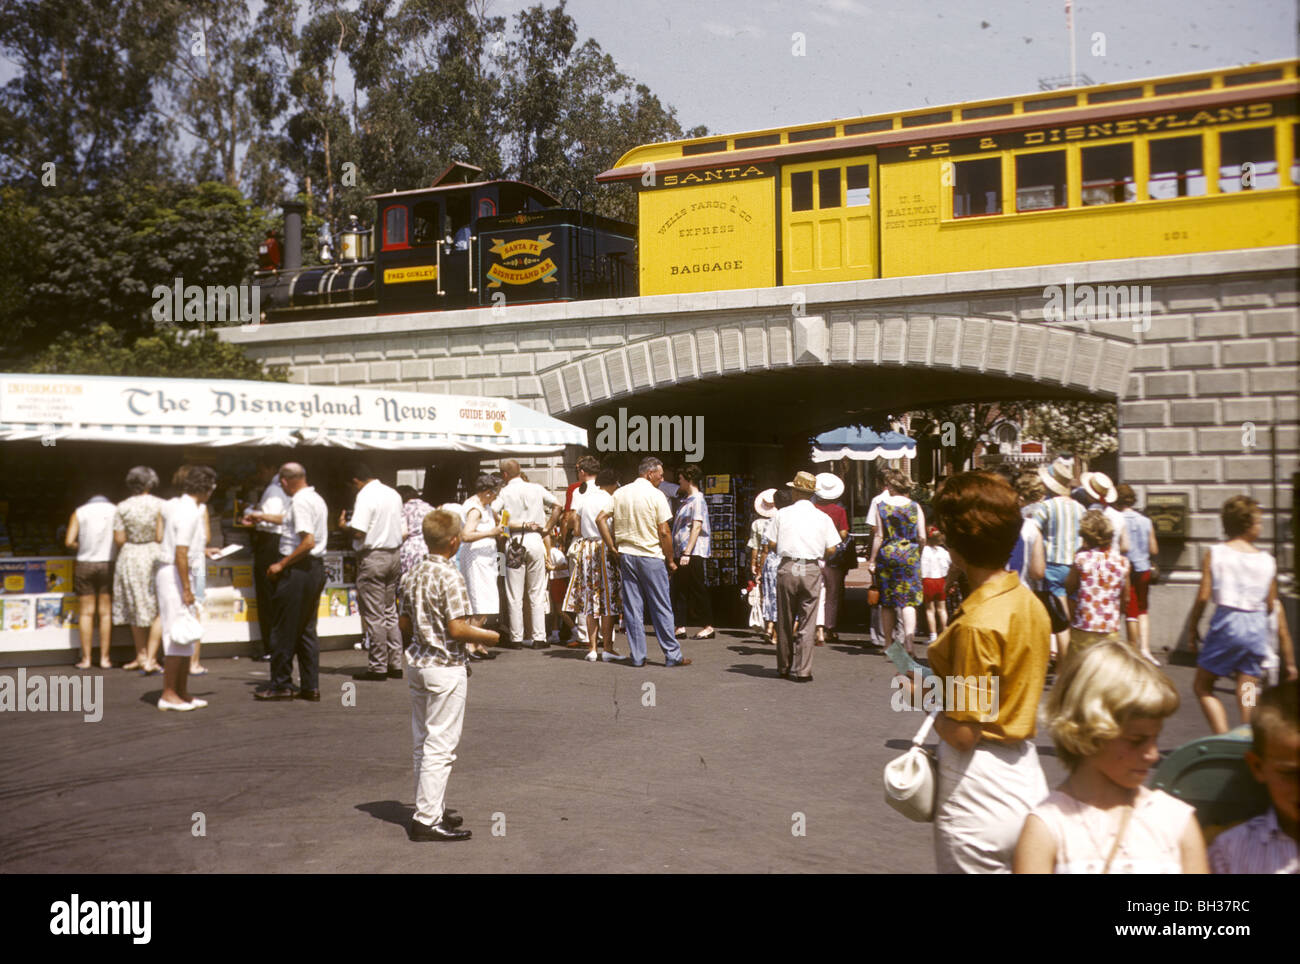 Santa Fe and Disney train and the Disneyland News stand. Disneyland vacation Kodachromes from 1962.  Stock Photo